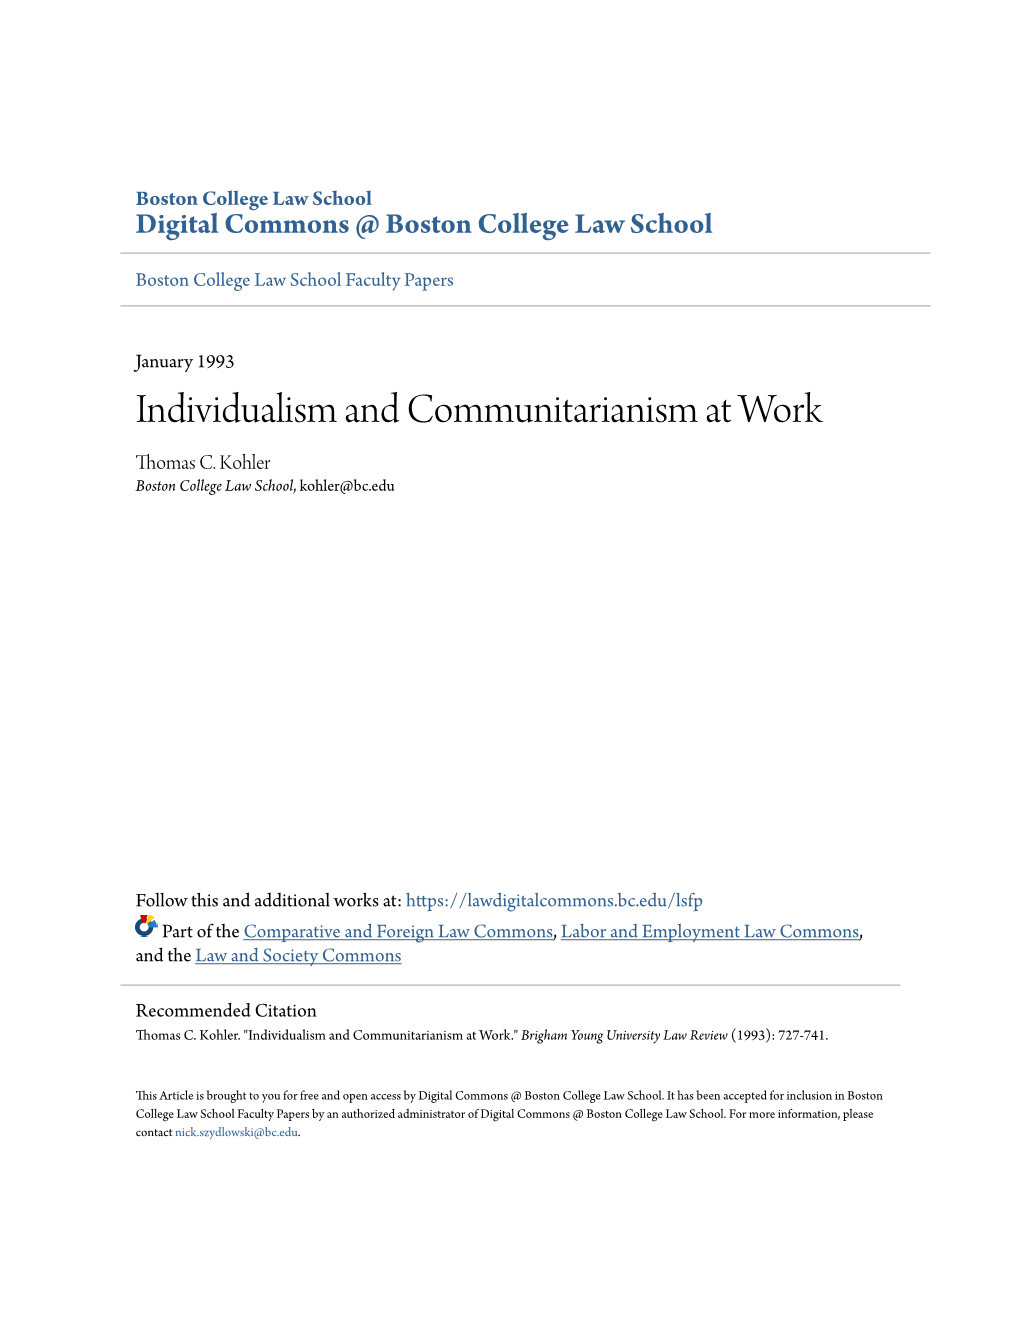 Individualism and Communitarianism at Work Thomas C